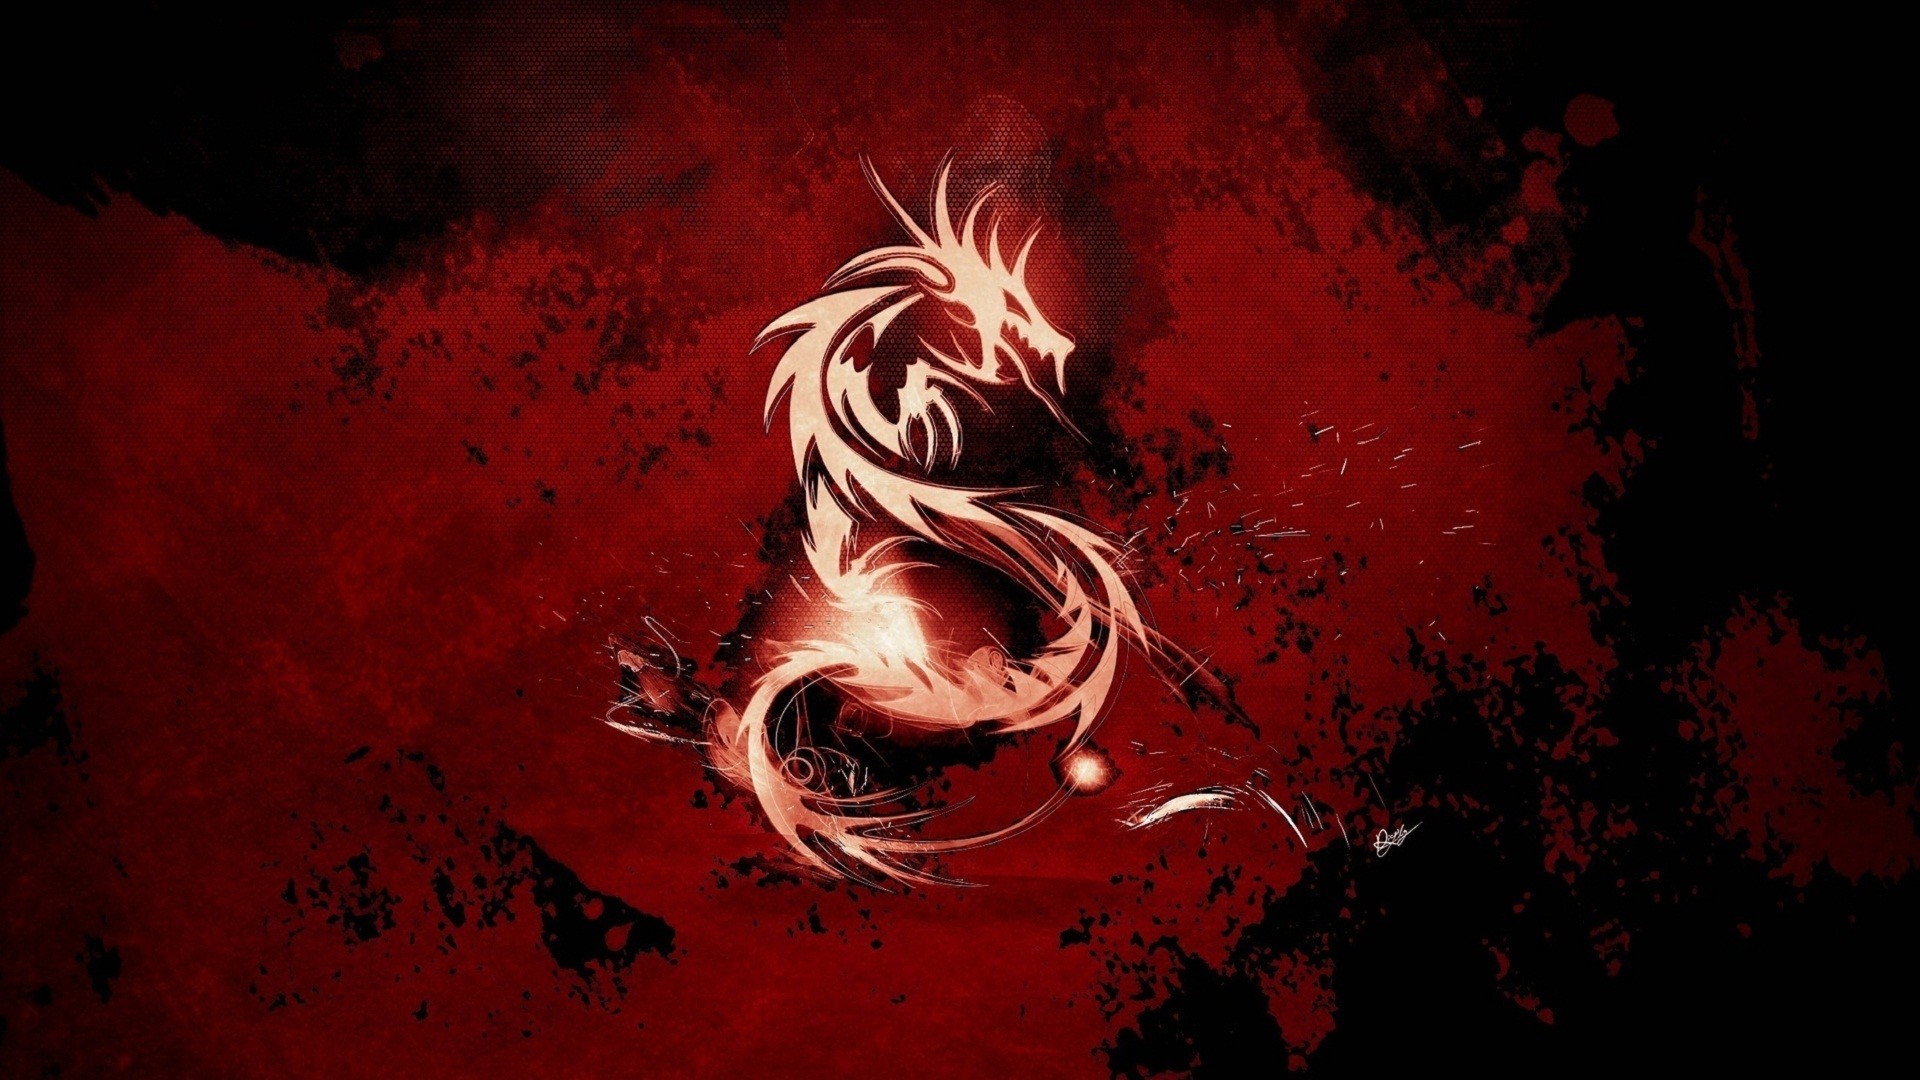 General 1920x1080 dragon red background artwork Kali Linux NetHunter hacking